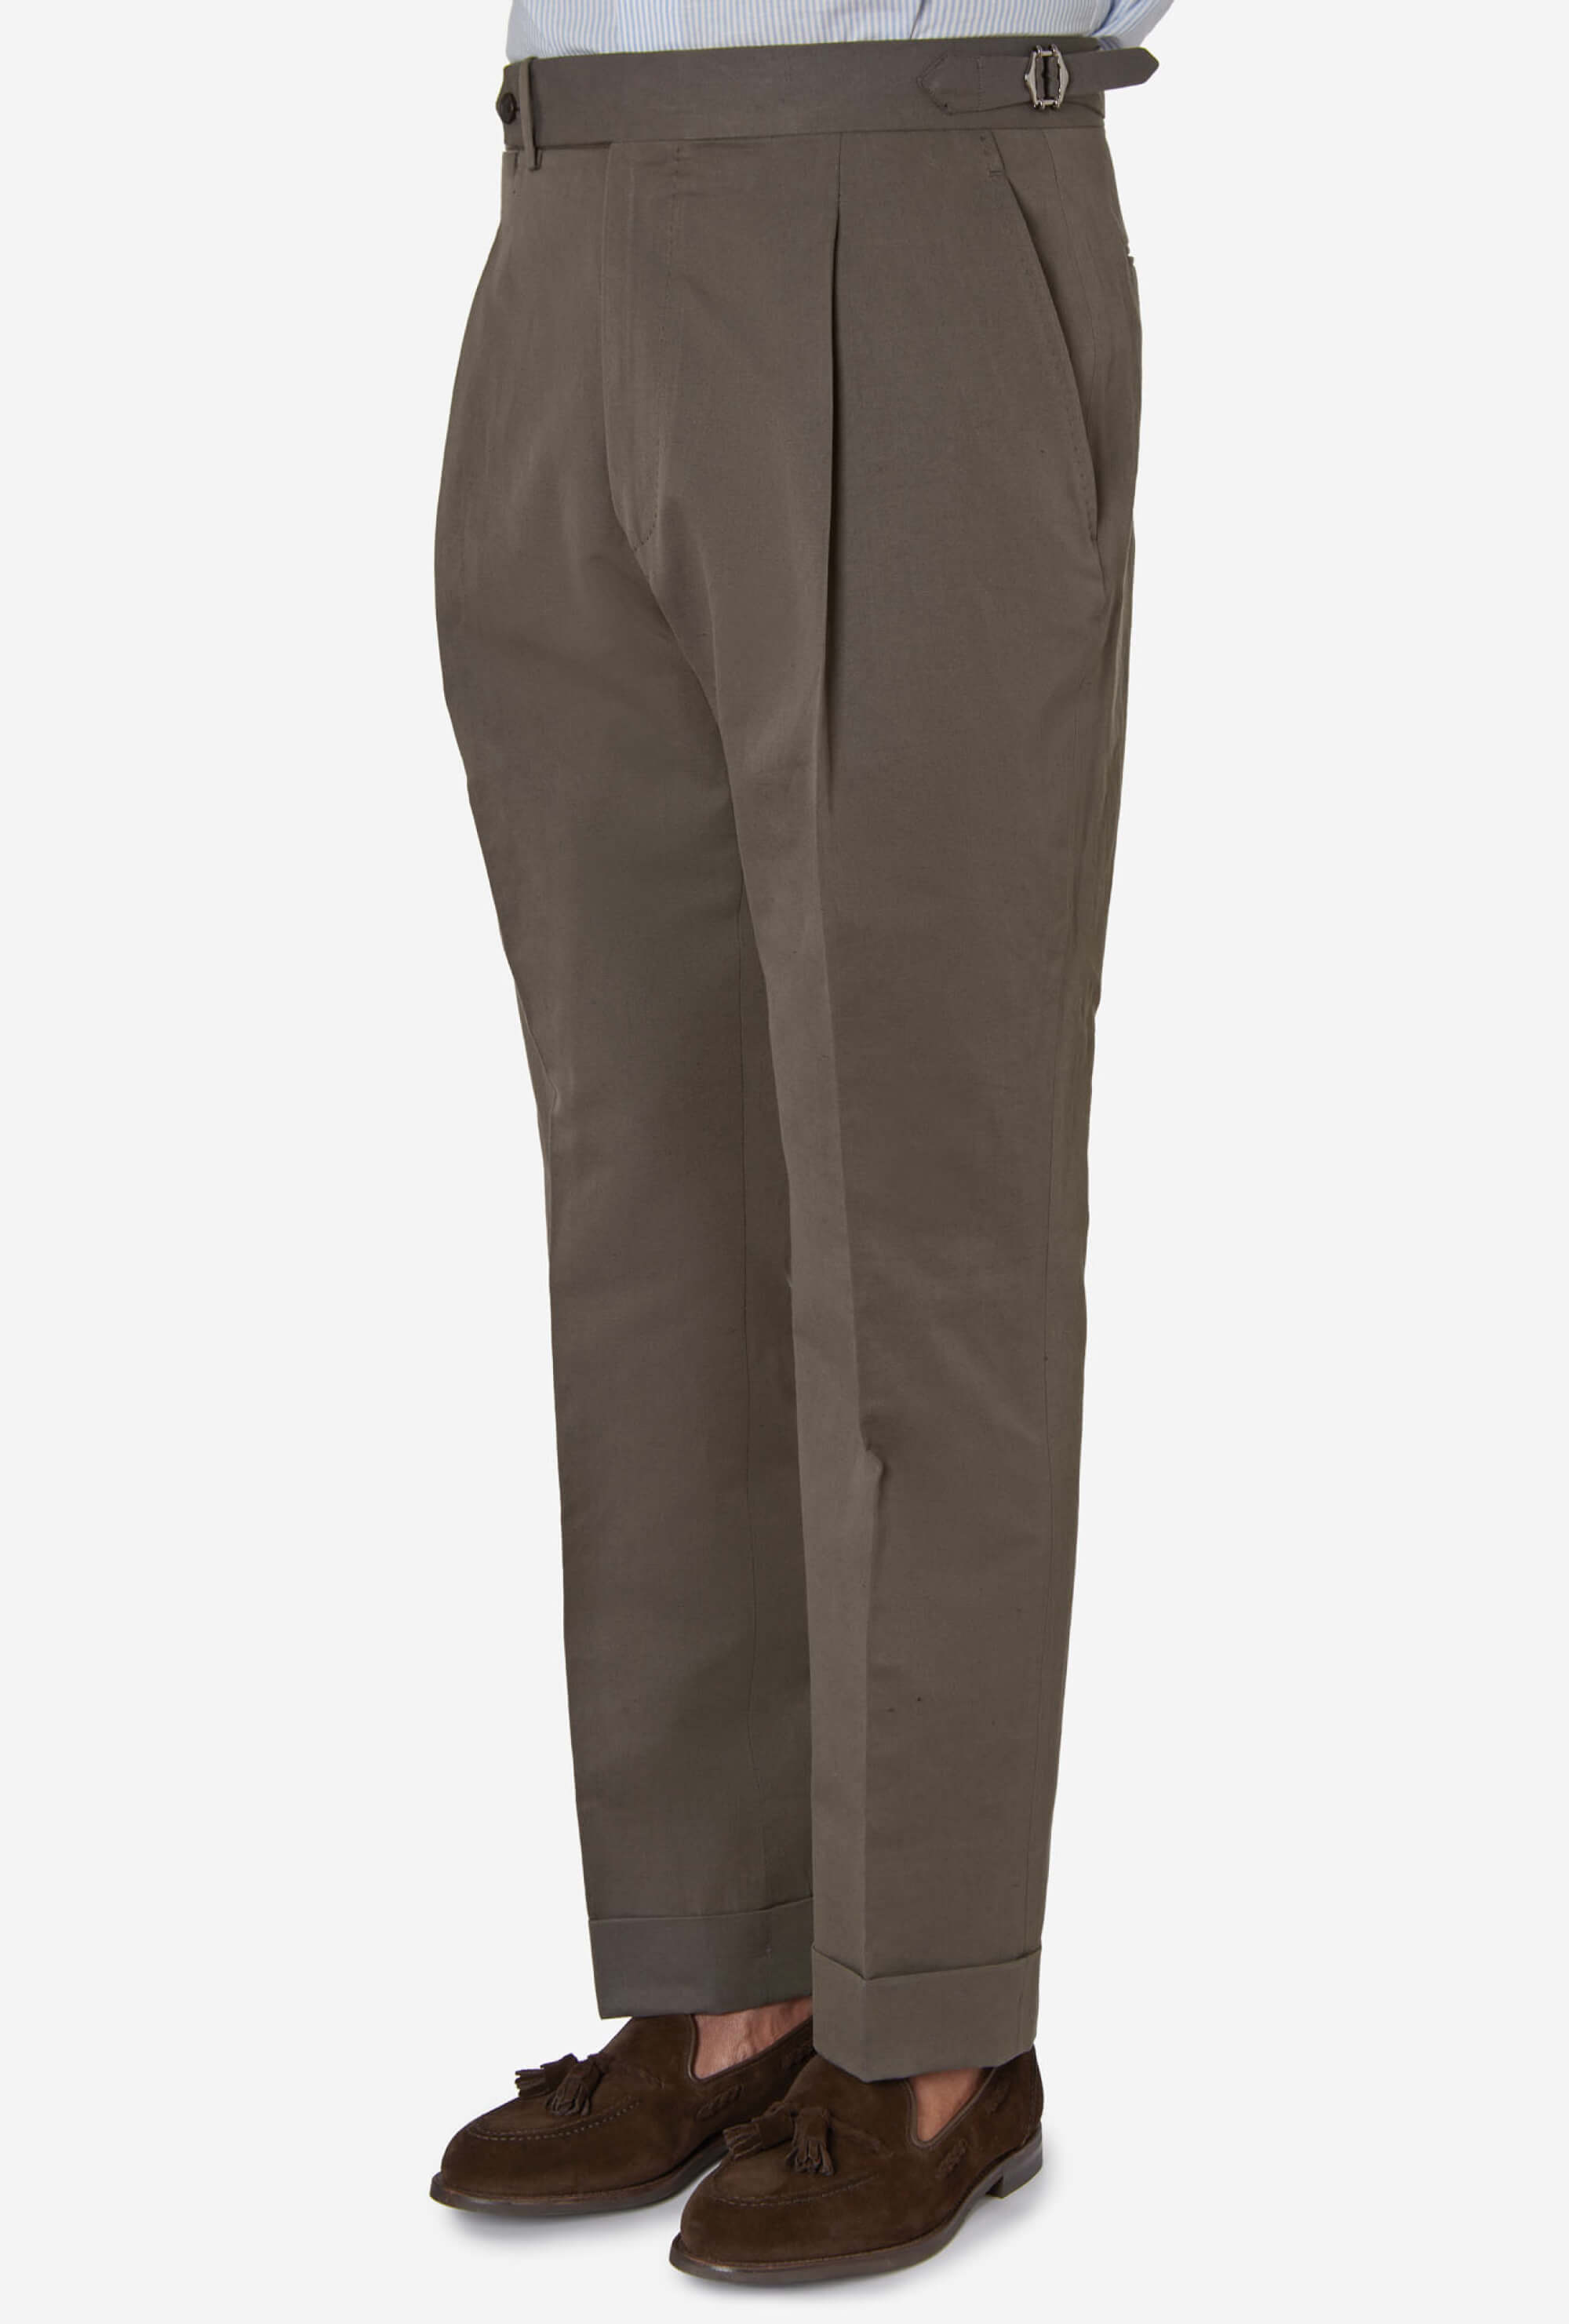 Burberry Ladies Cotton Silk Striped Tailored Track Pants, Brand Size 8 (US  Size 6) - Walmart.com